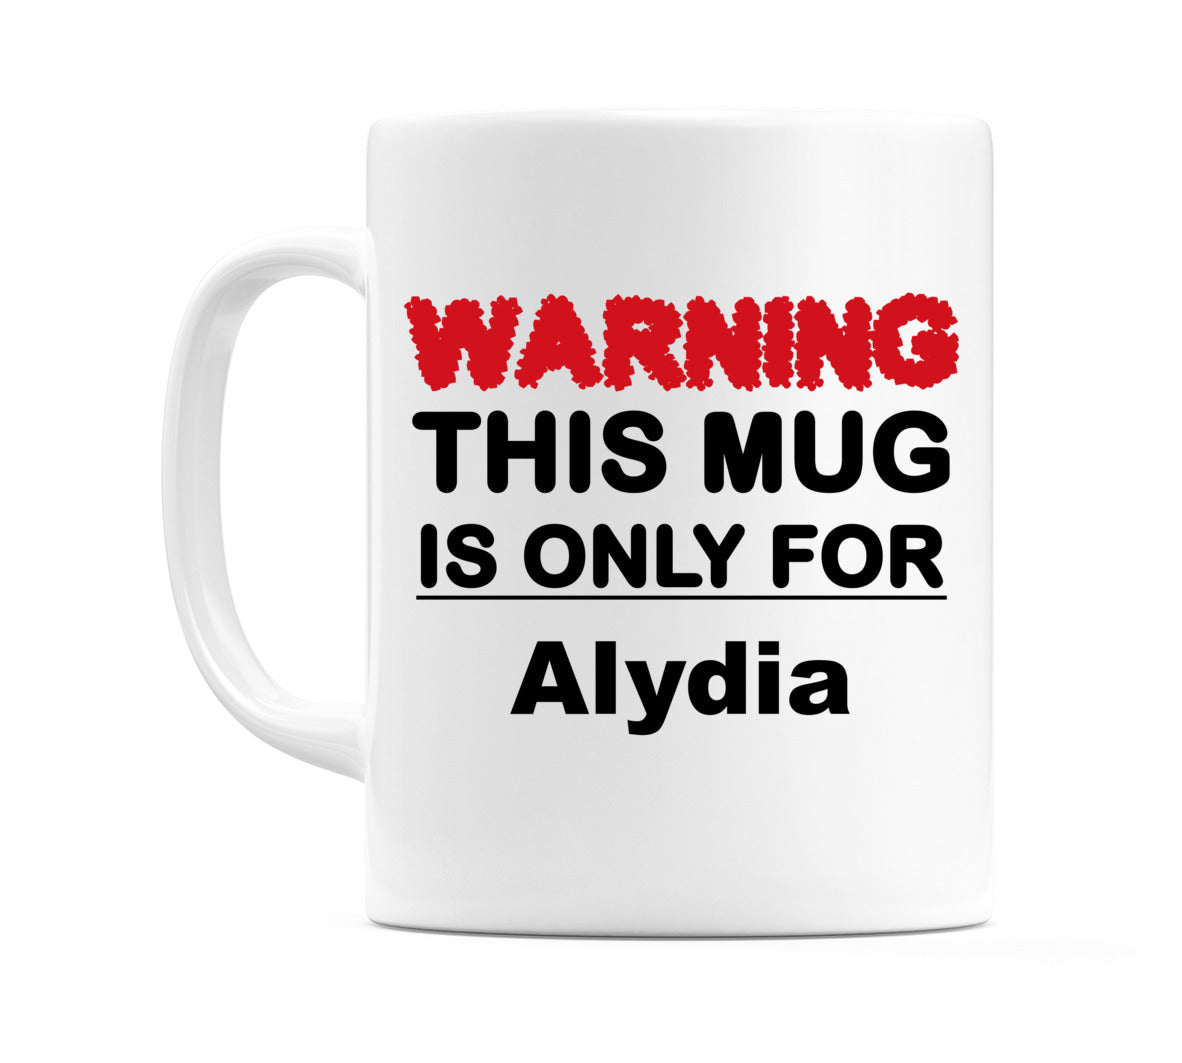 Warning This Mug is ONLY for Alydia Mug